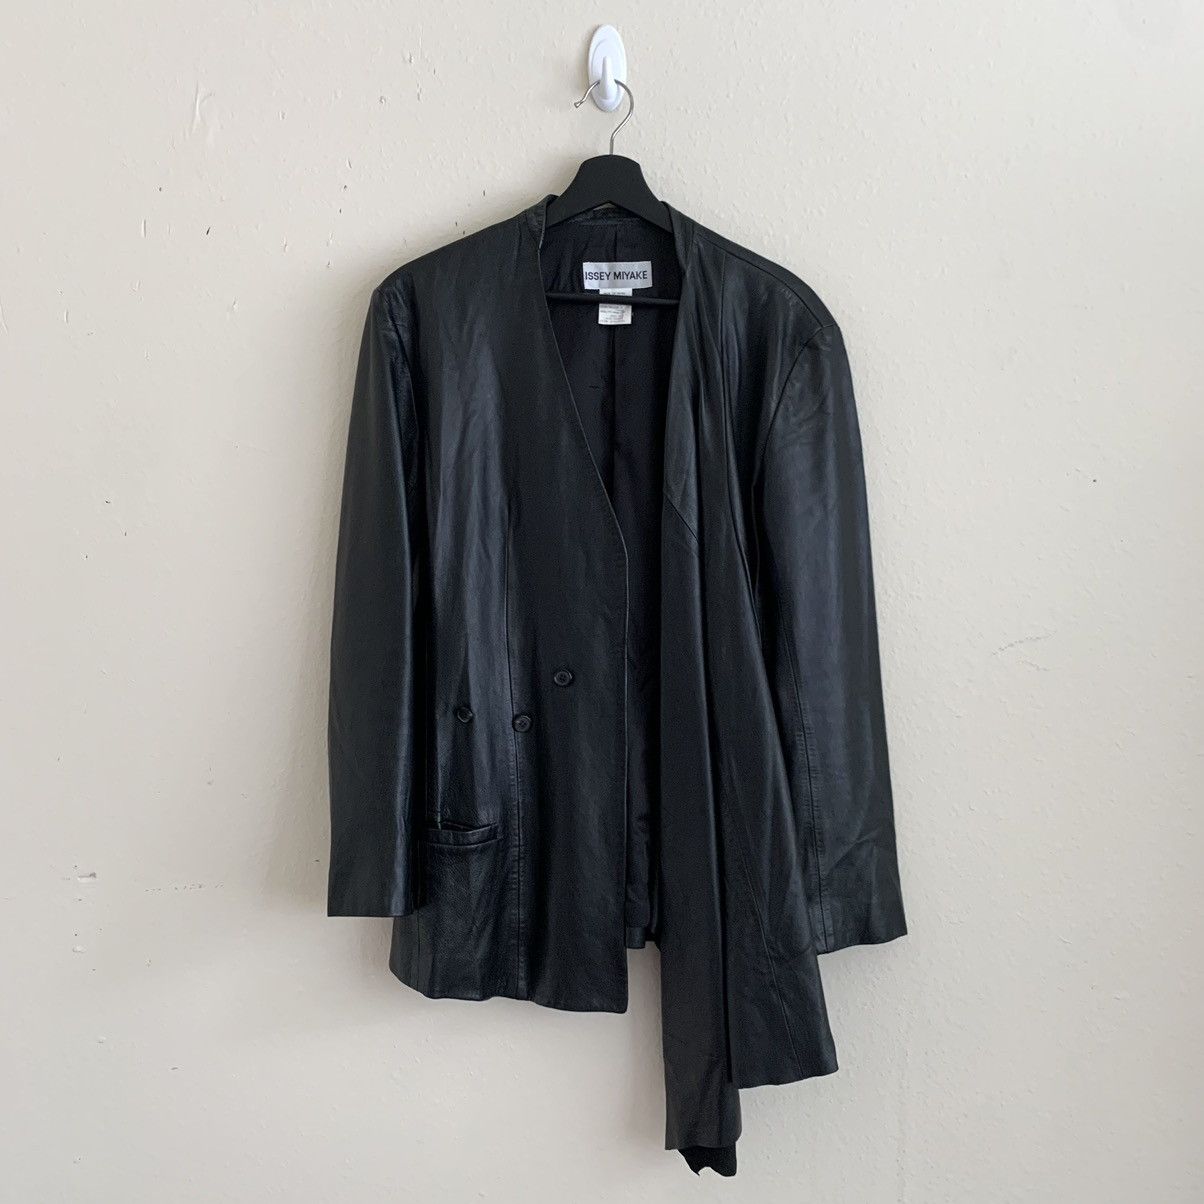 Issey Miyake Issey Miyake sheepskin leather jacket | Grailed